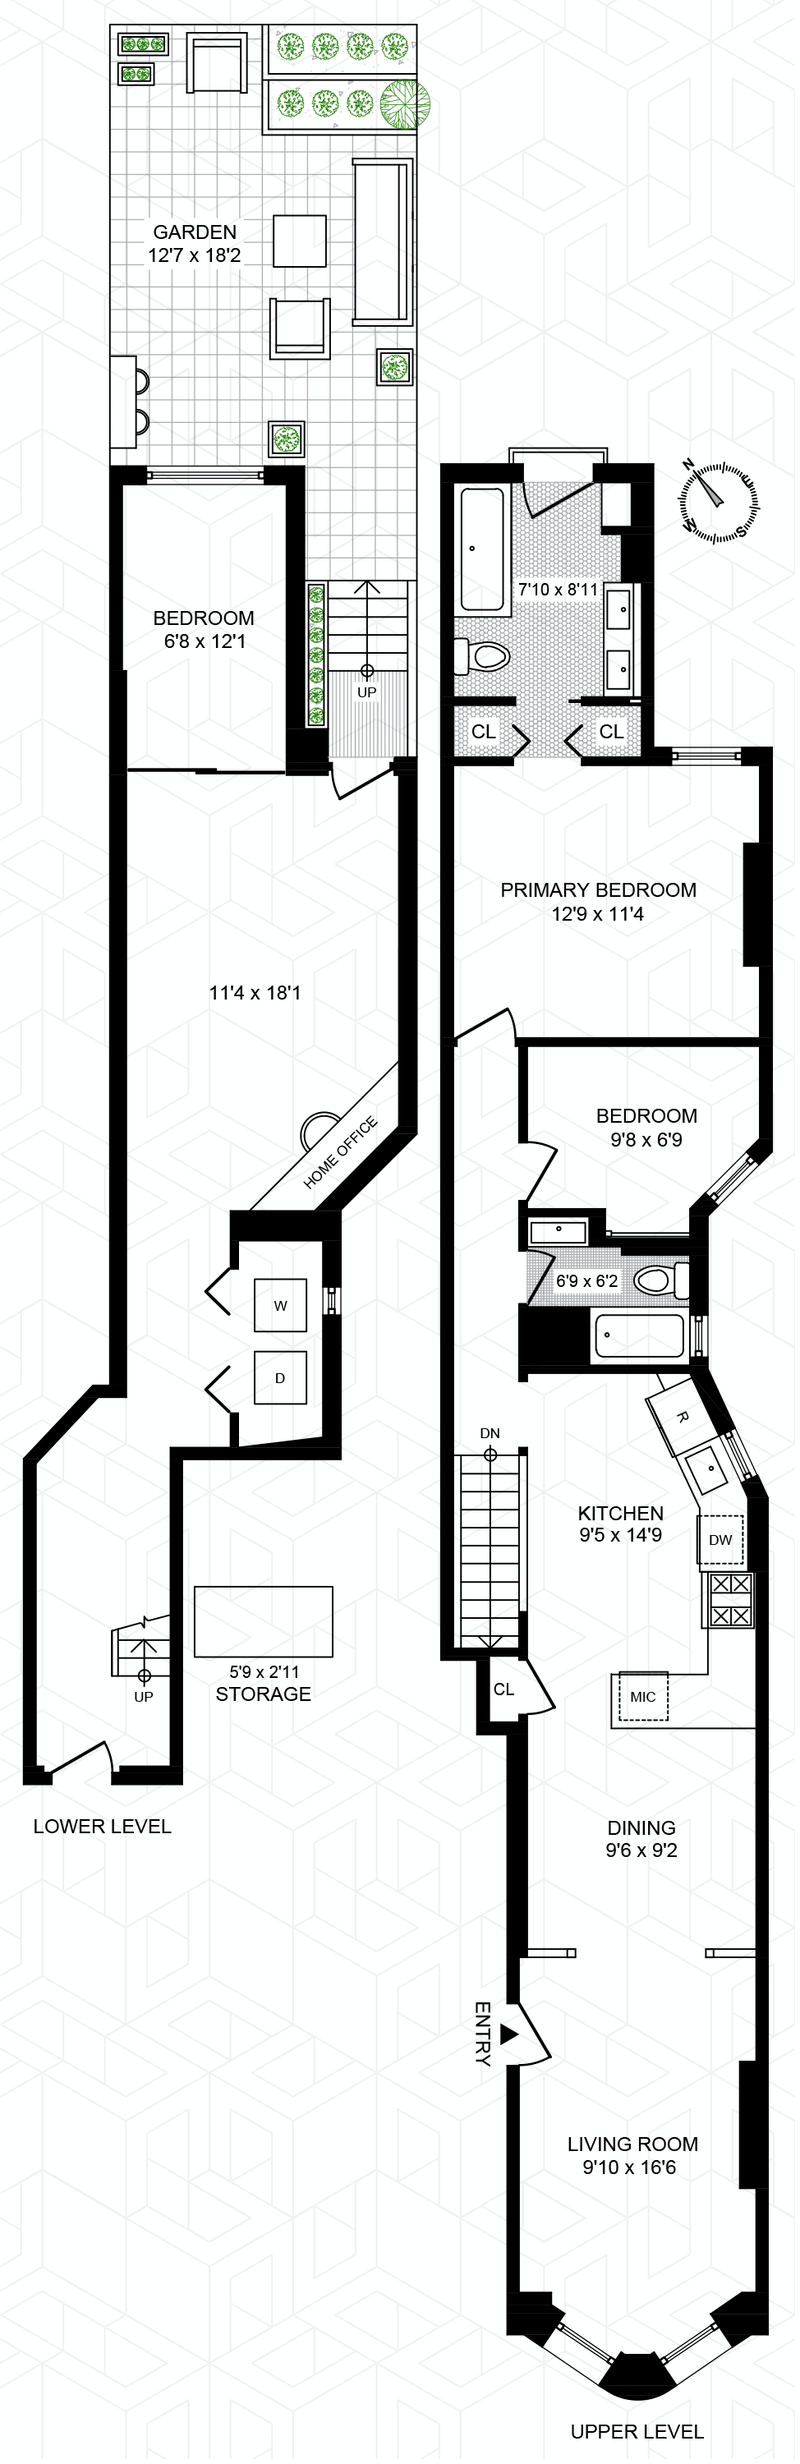 Floorplan for 707 Carroll Street, 1R